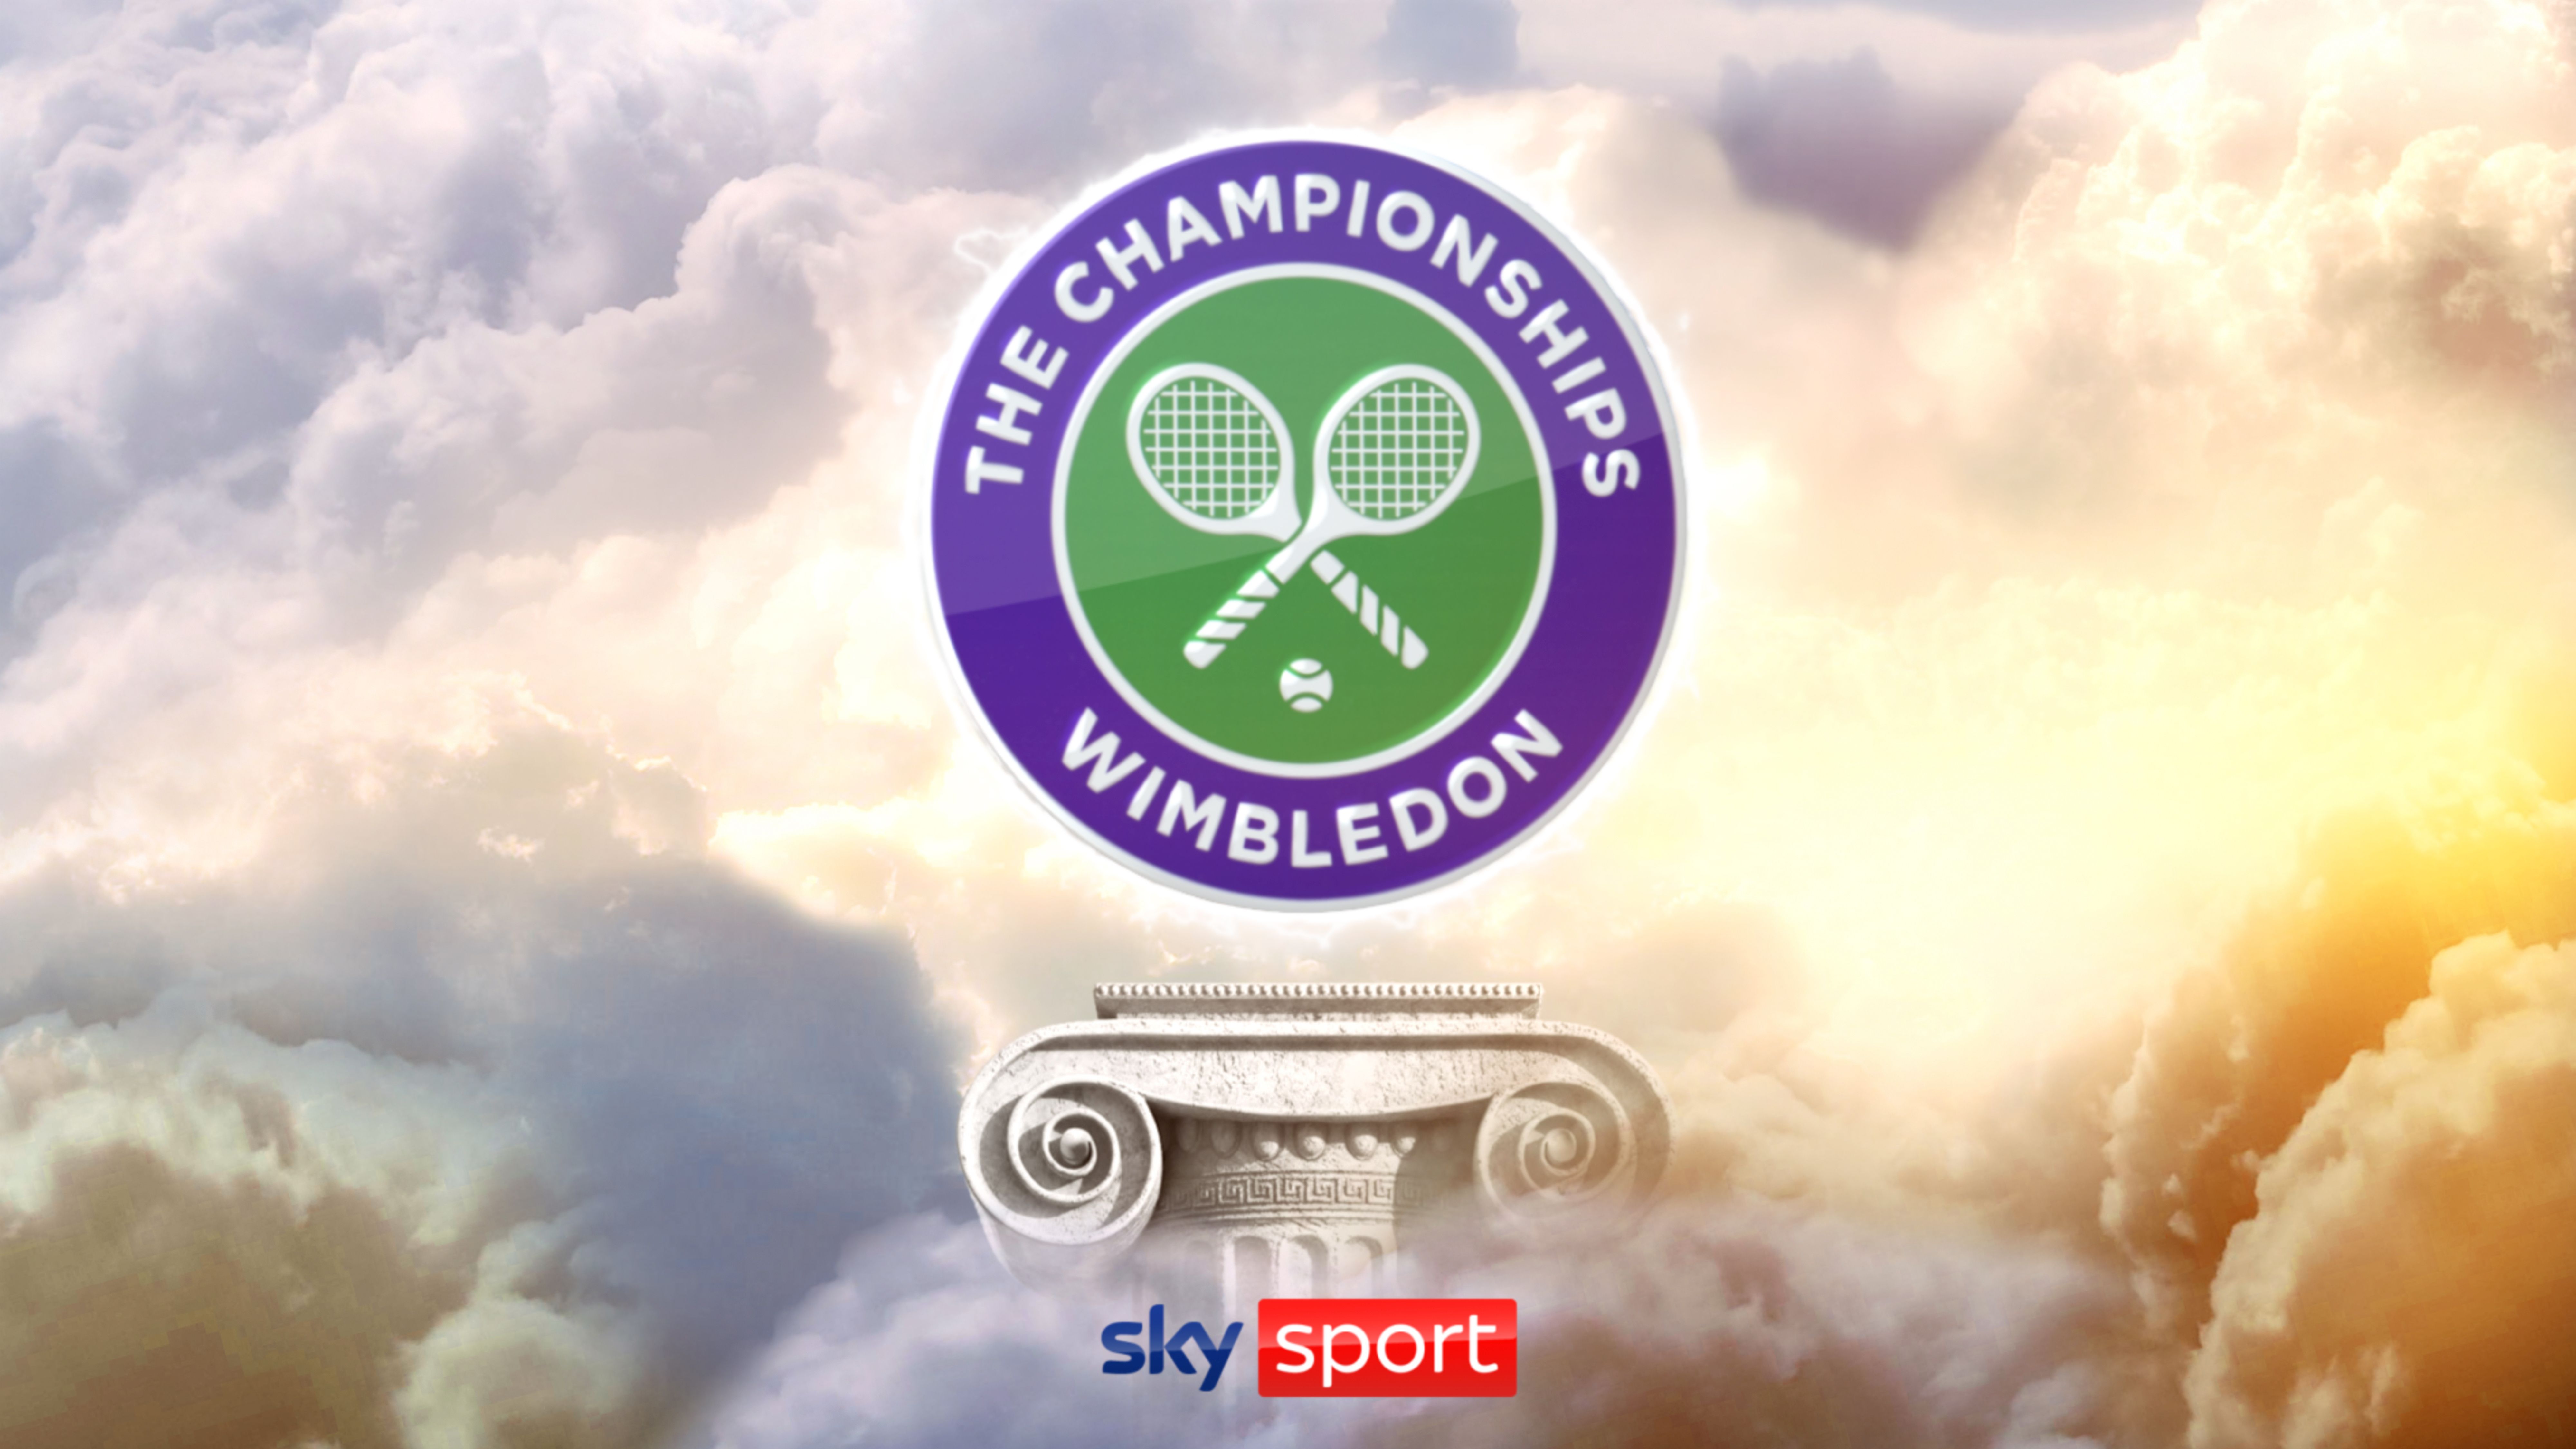 Wimbledon 2021 Bei Sky 350 Stunden Live Die Konferenz Mit Sky Experte Patrik Presseportal